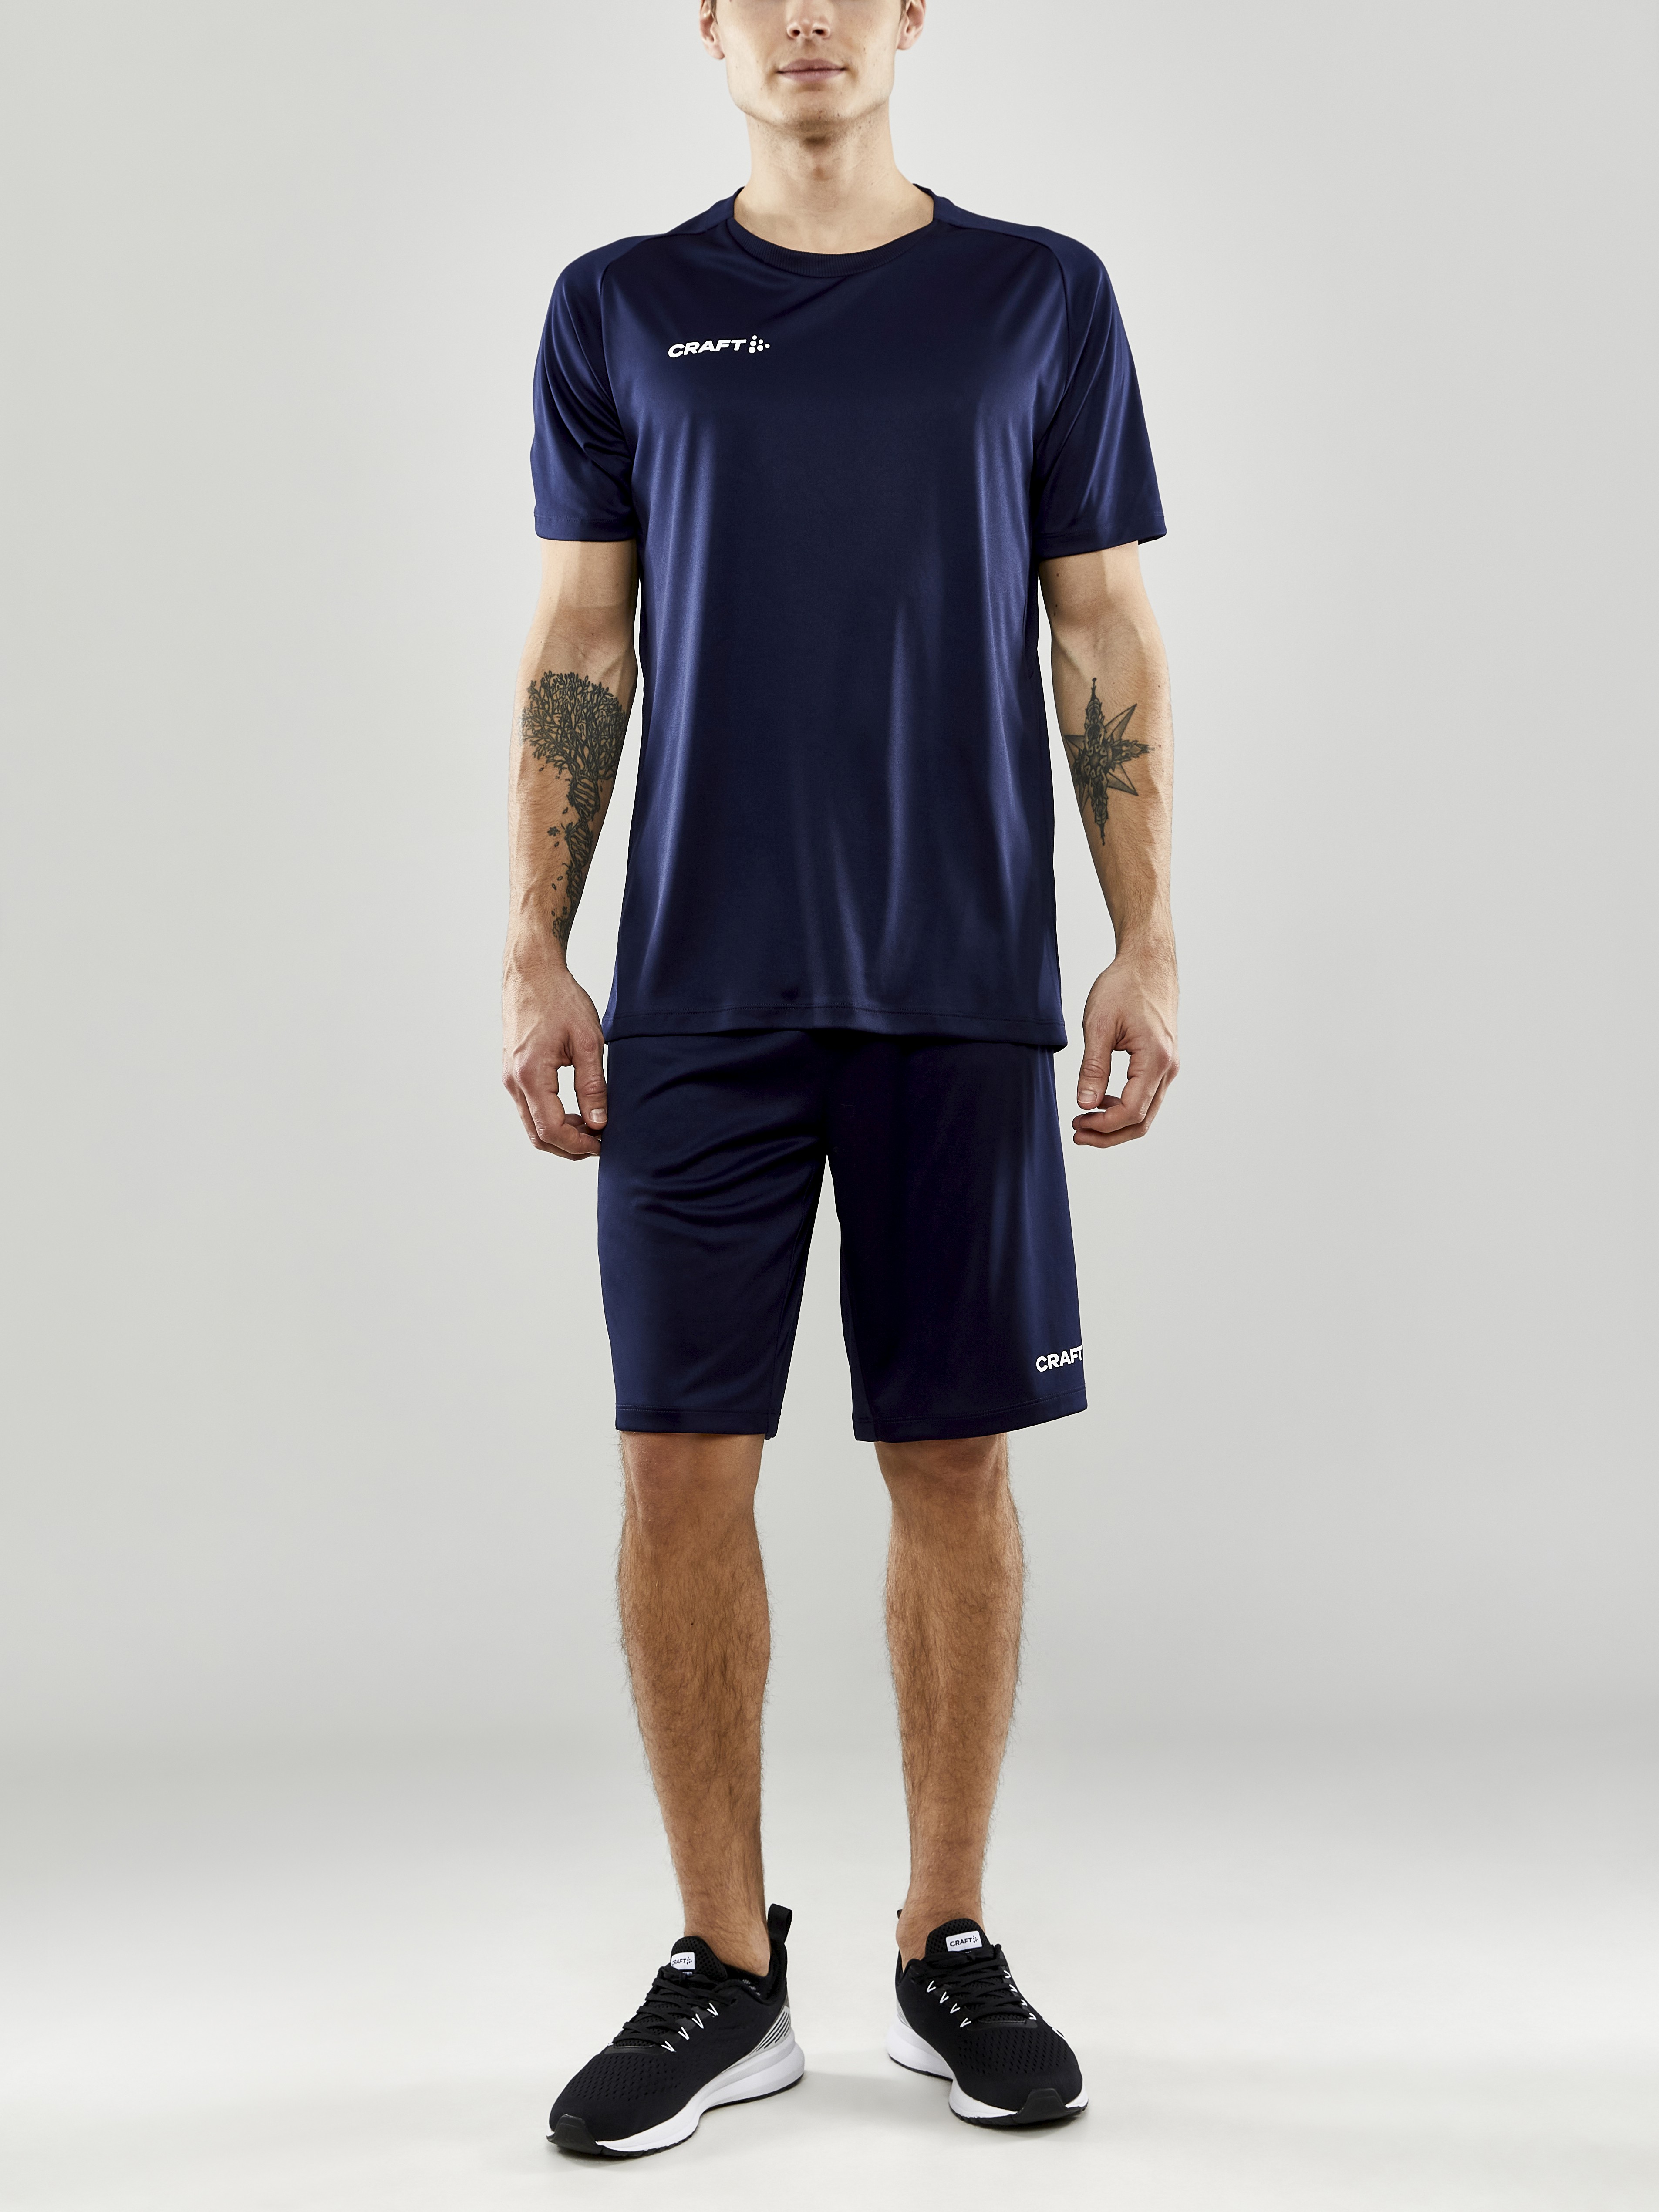 - M | Tee Sportswear blue Evolve Craft Navy